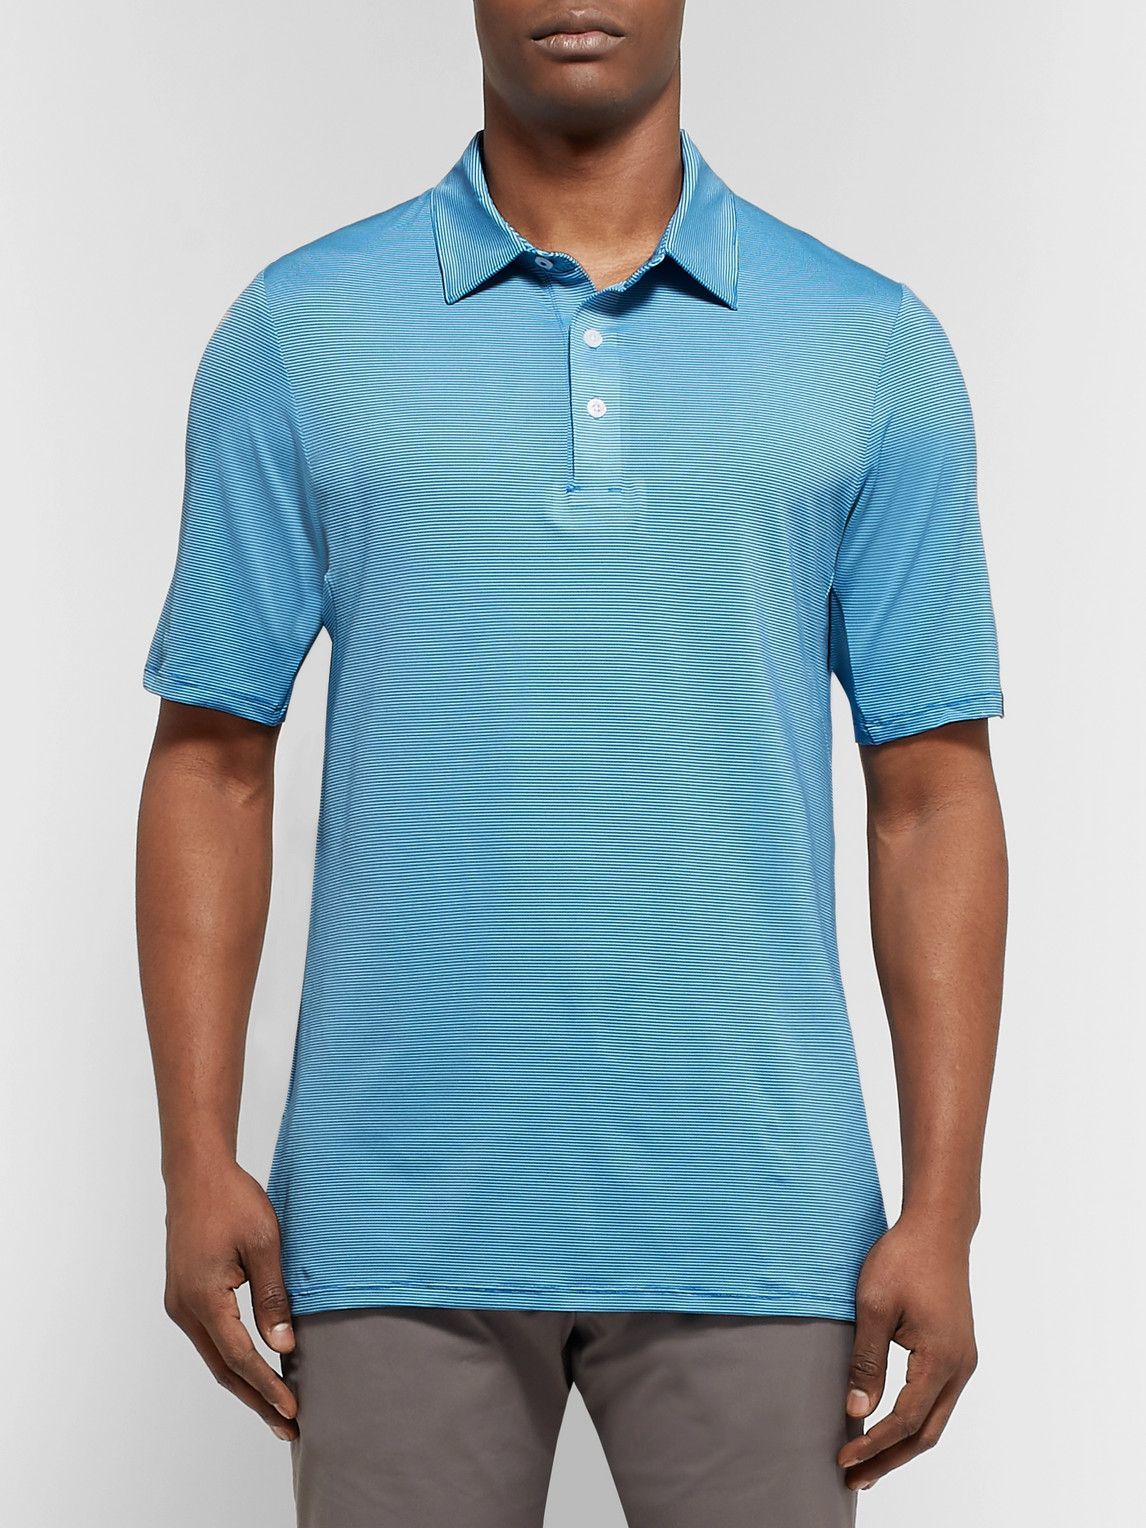 Kjus Golf - Soren Striped Stretch-Jersey Golf Polo Shirt - Blue Kjus Golf